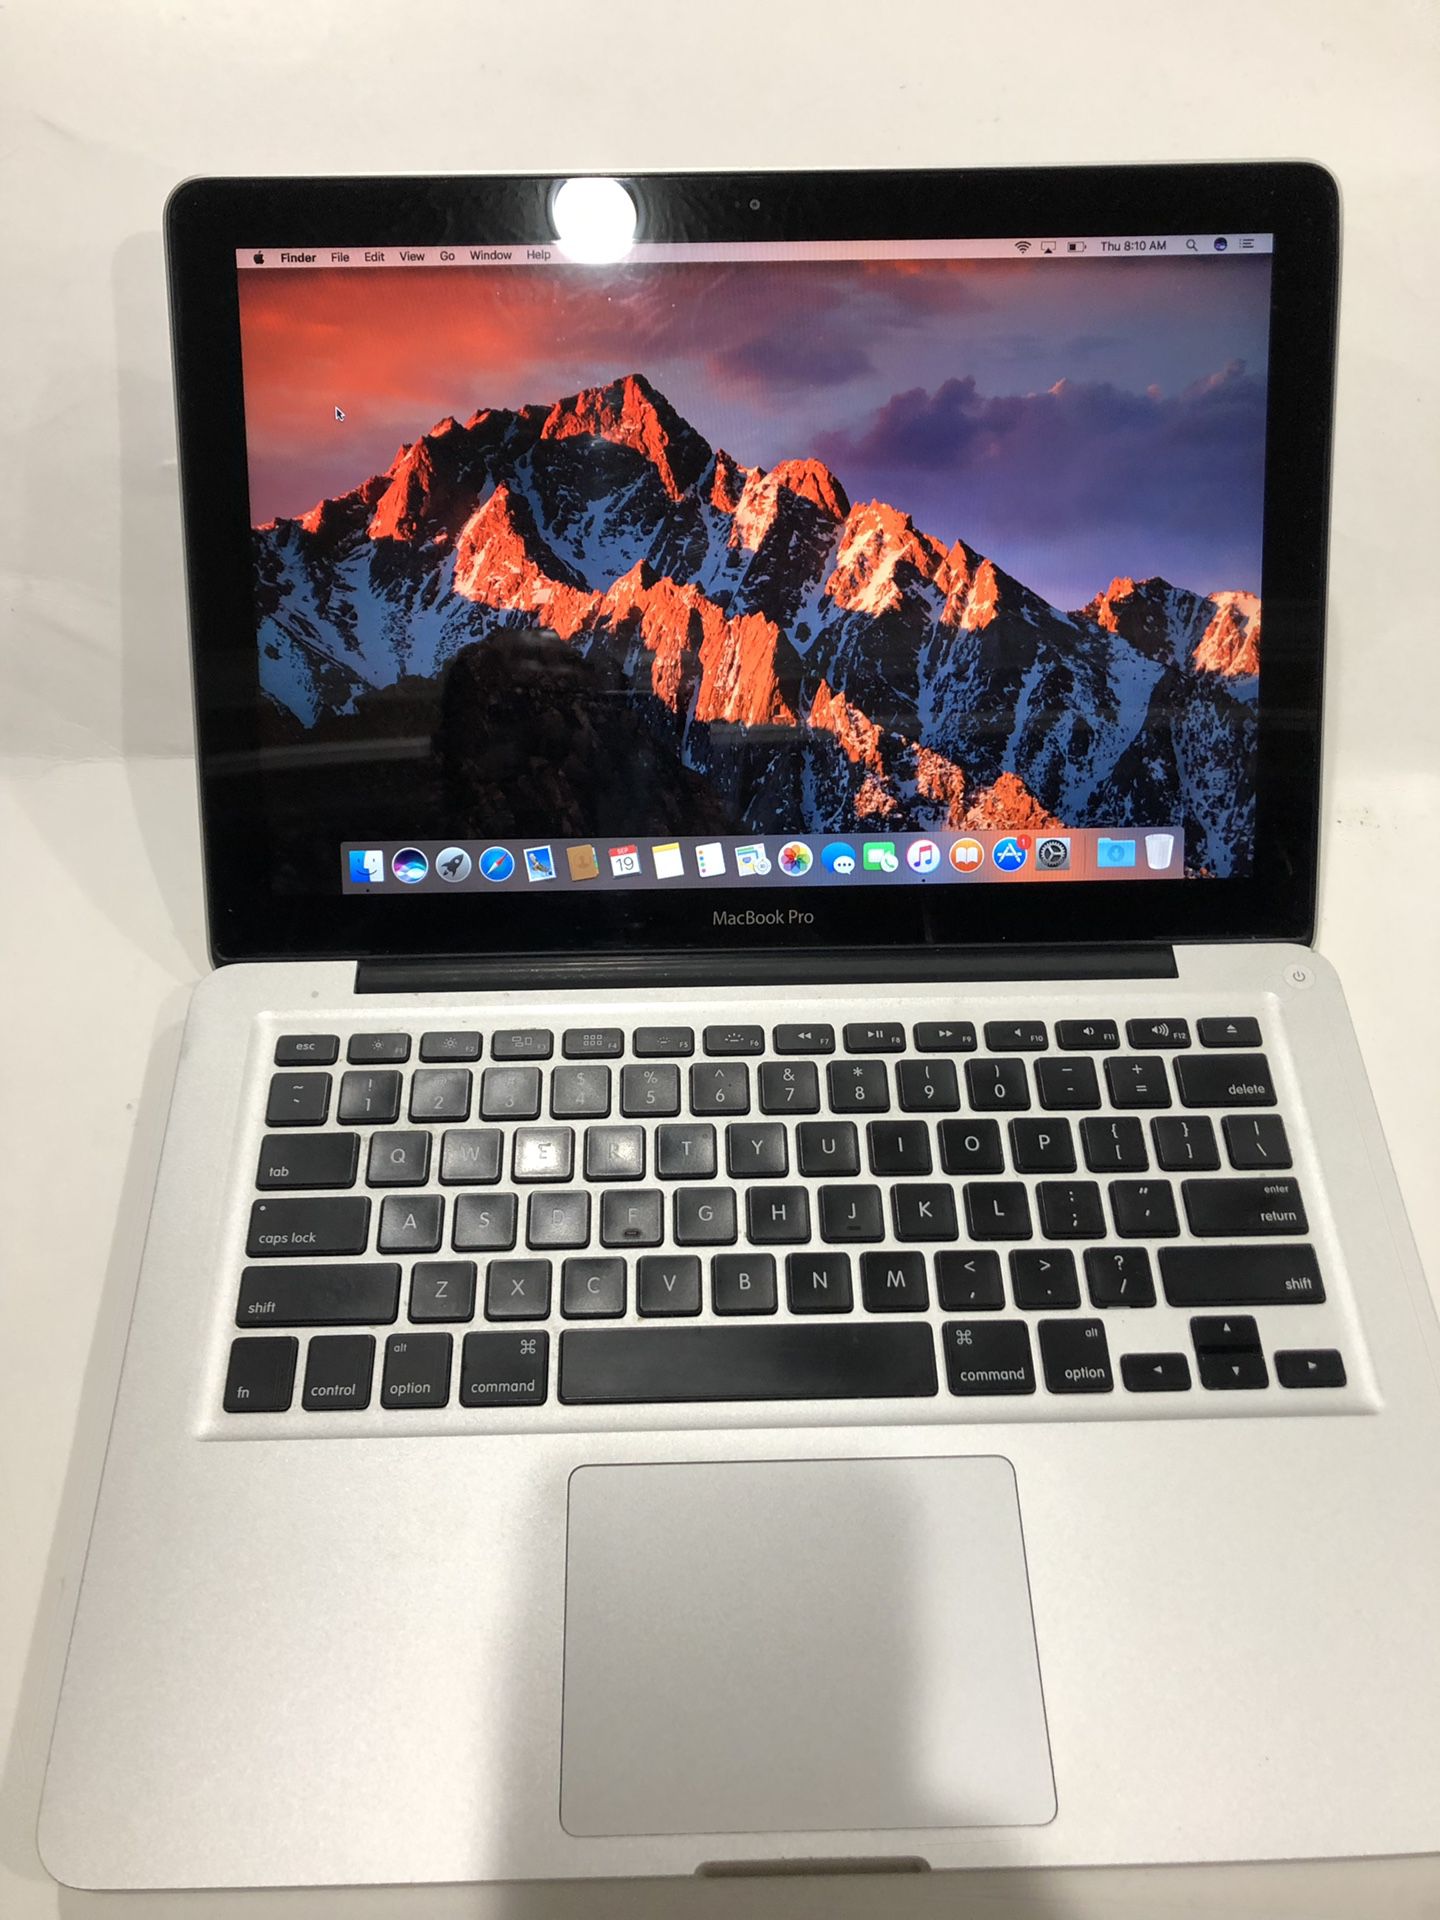 MacBook Pro 2012 Intel core i7, 8 GB RAM, 1 TB Hard Drive, OS Sierra, Office 2019 for Mac